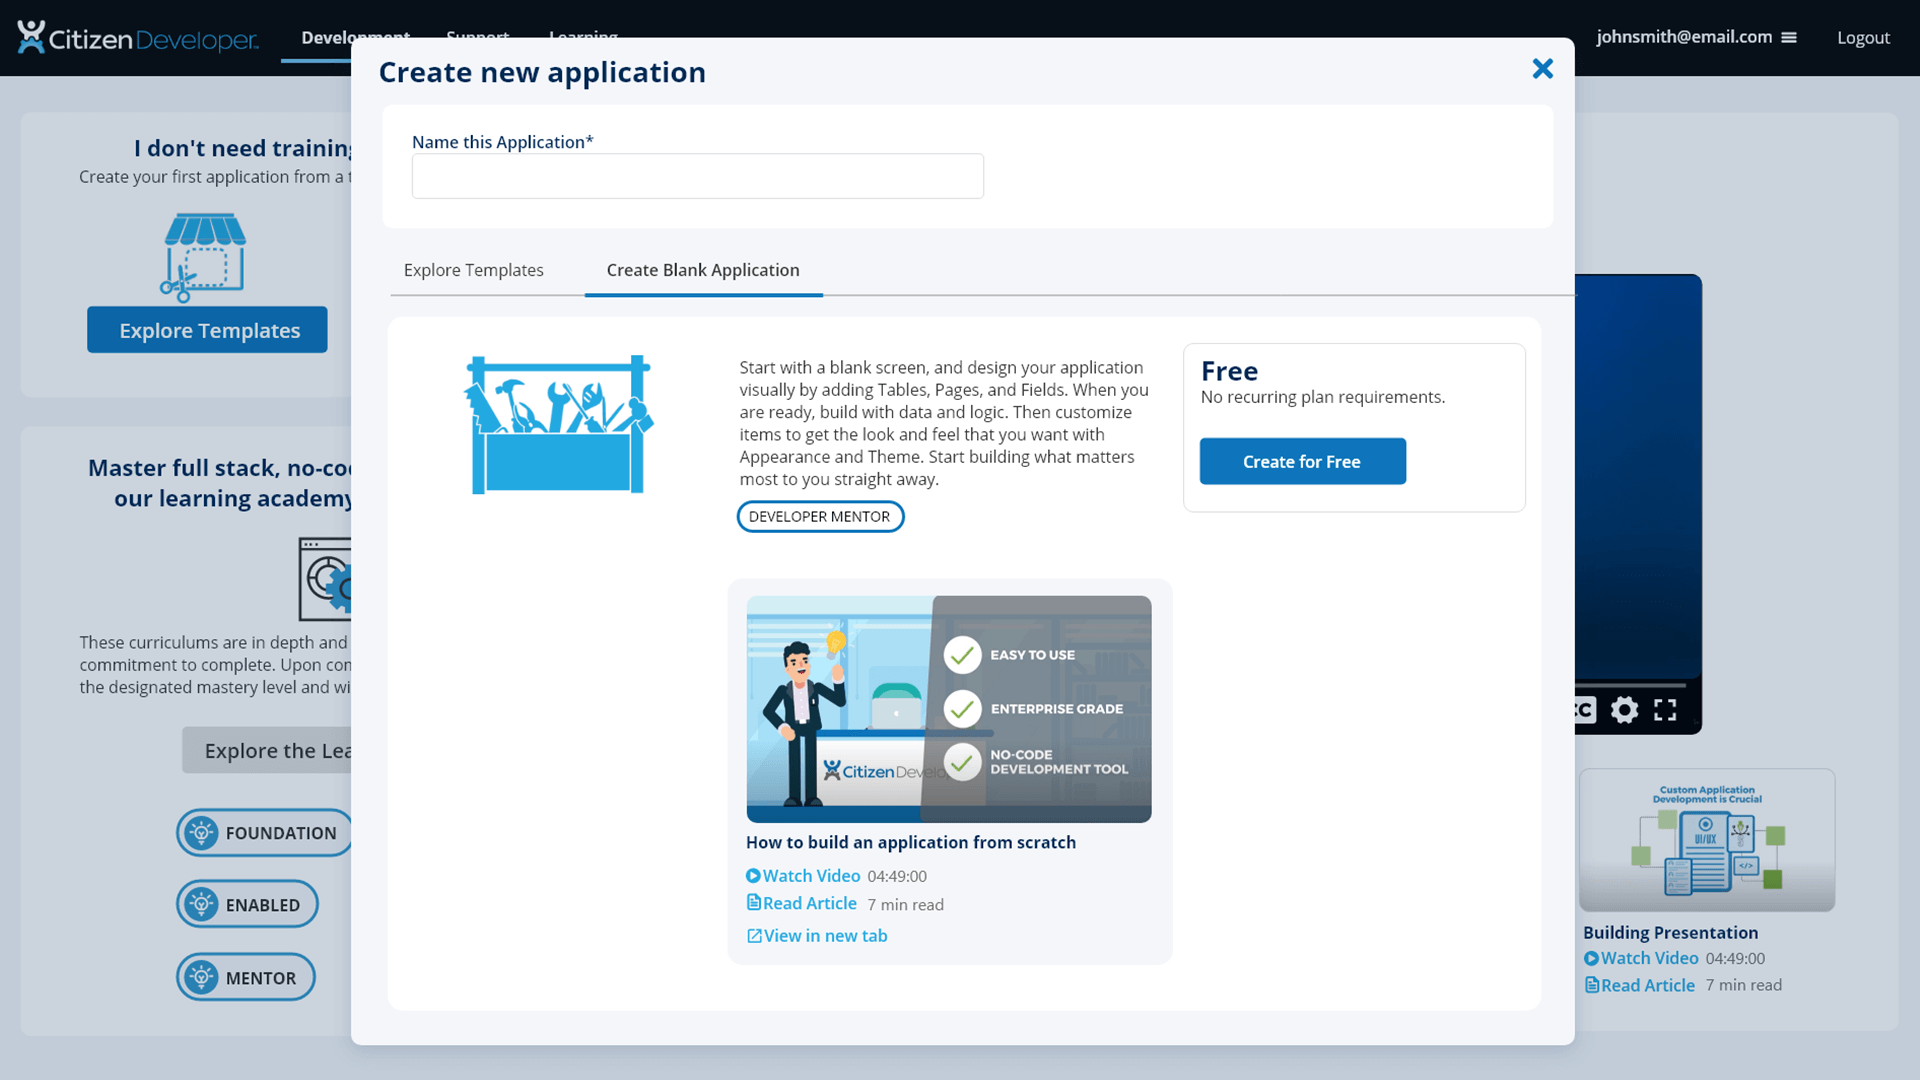 Screenshot of creating a new blank application on the CitizenDeveloper platform.